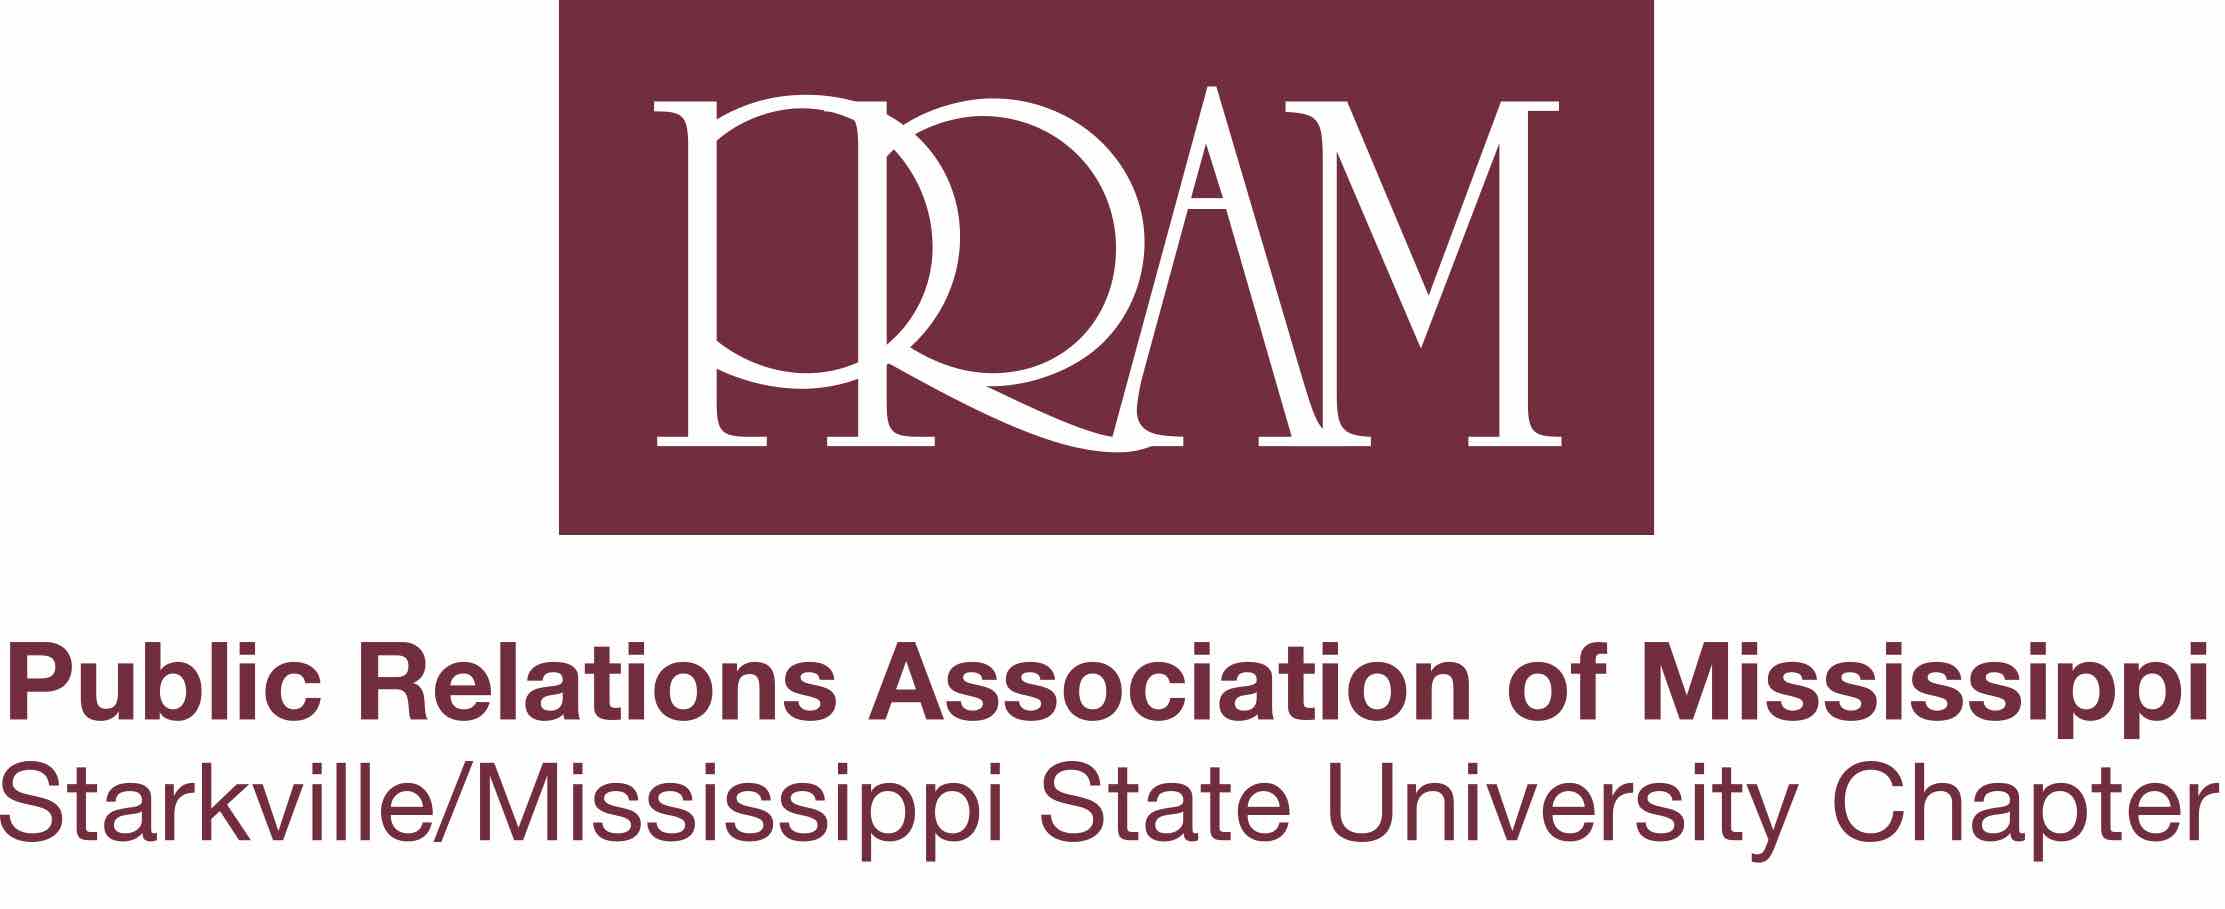 Public Relations Association of Mississippi - Starkville/Mississippi State University Chapter